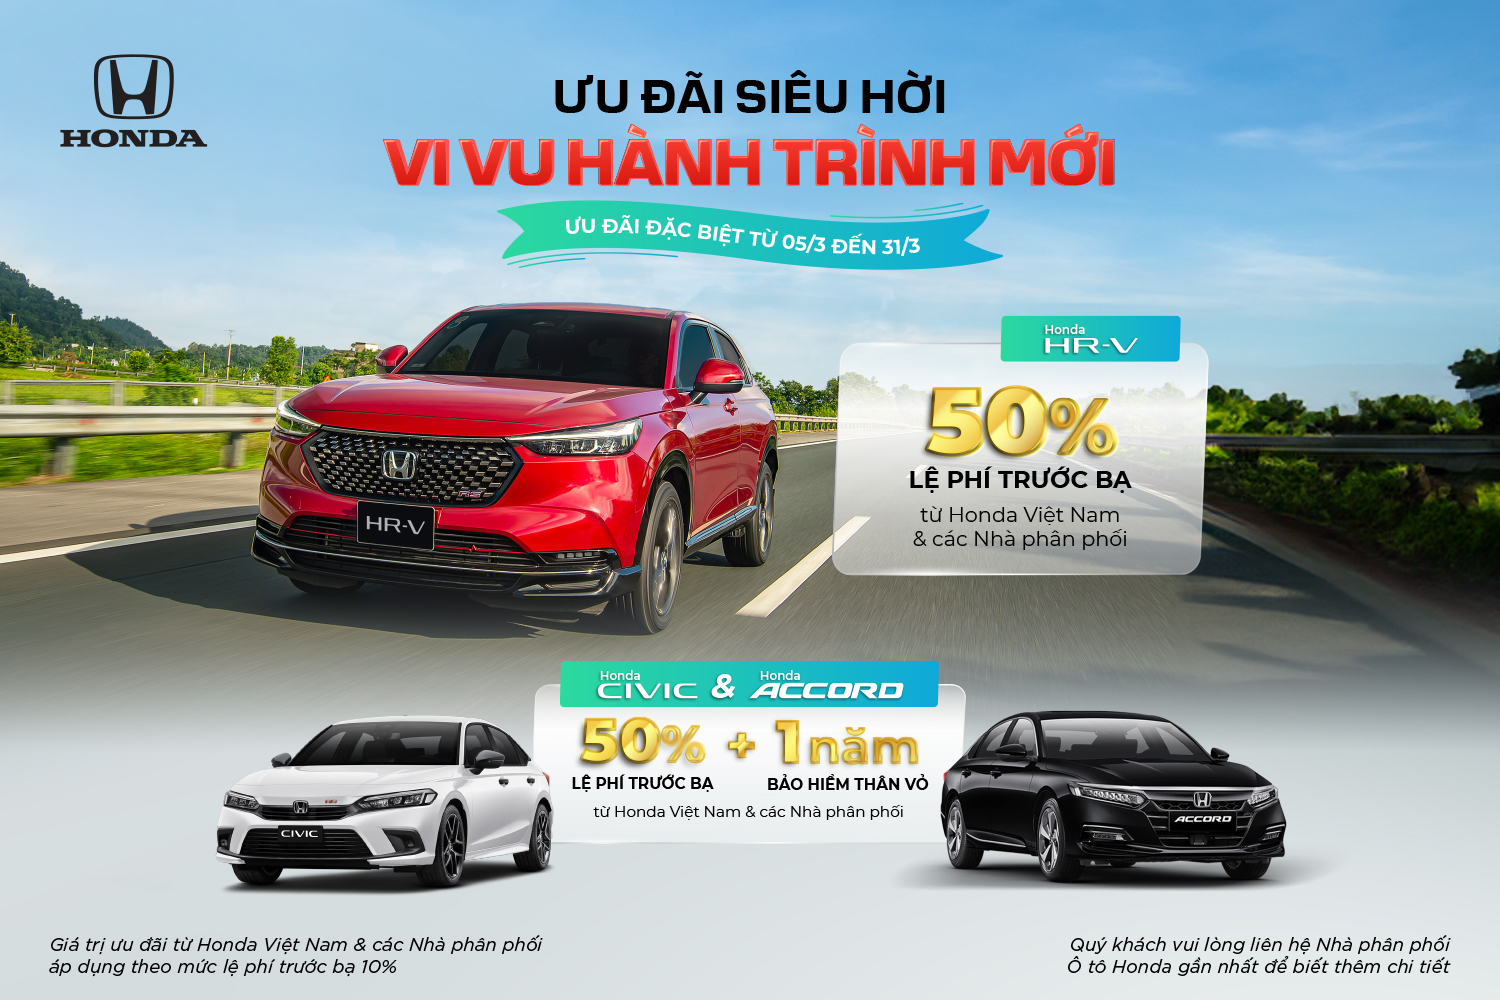 Honda___KV___ALL_Promotion_T03_ver3-scale1500x1000